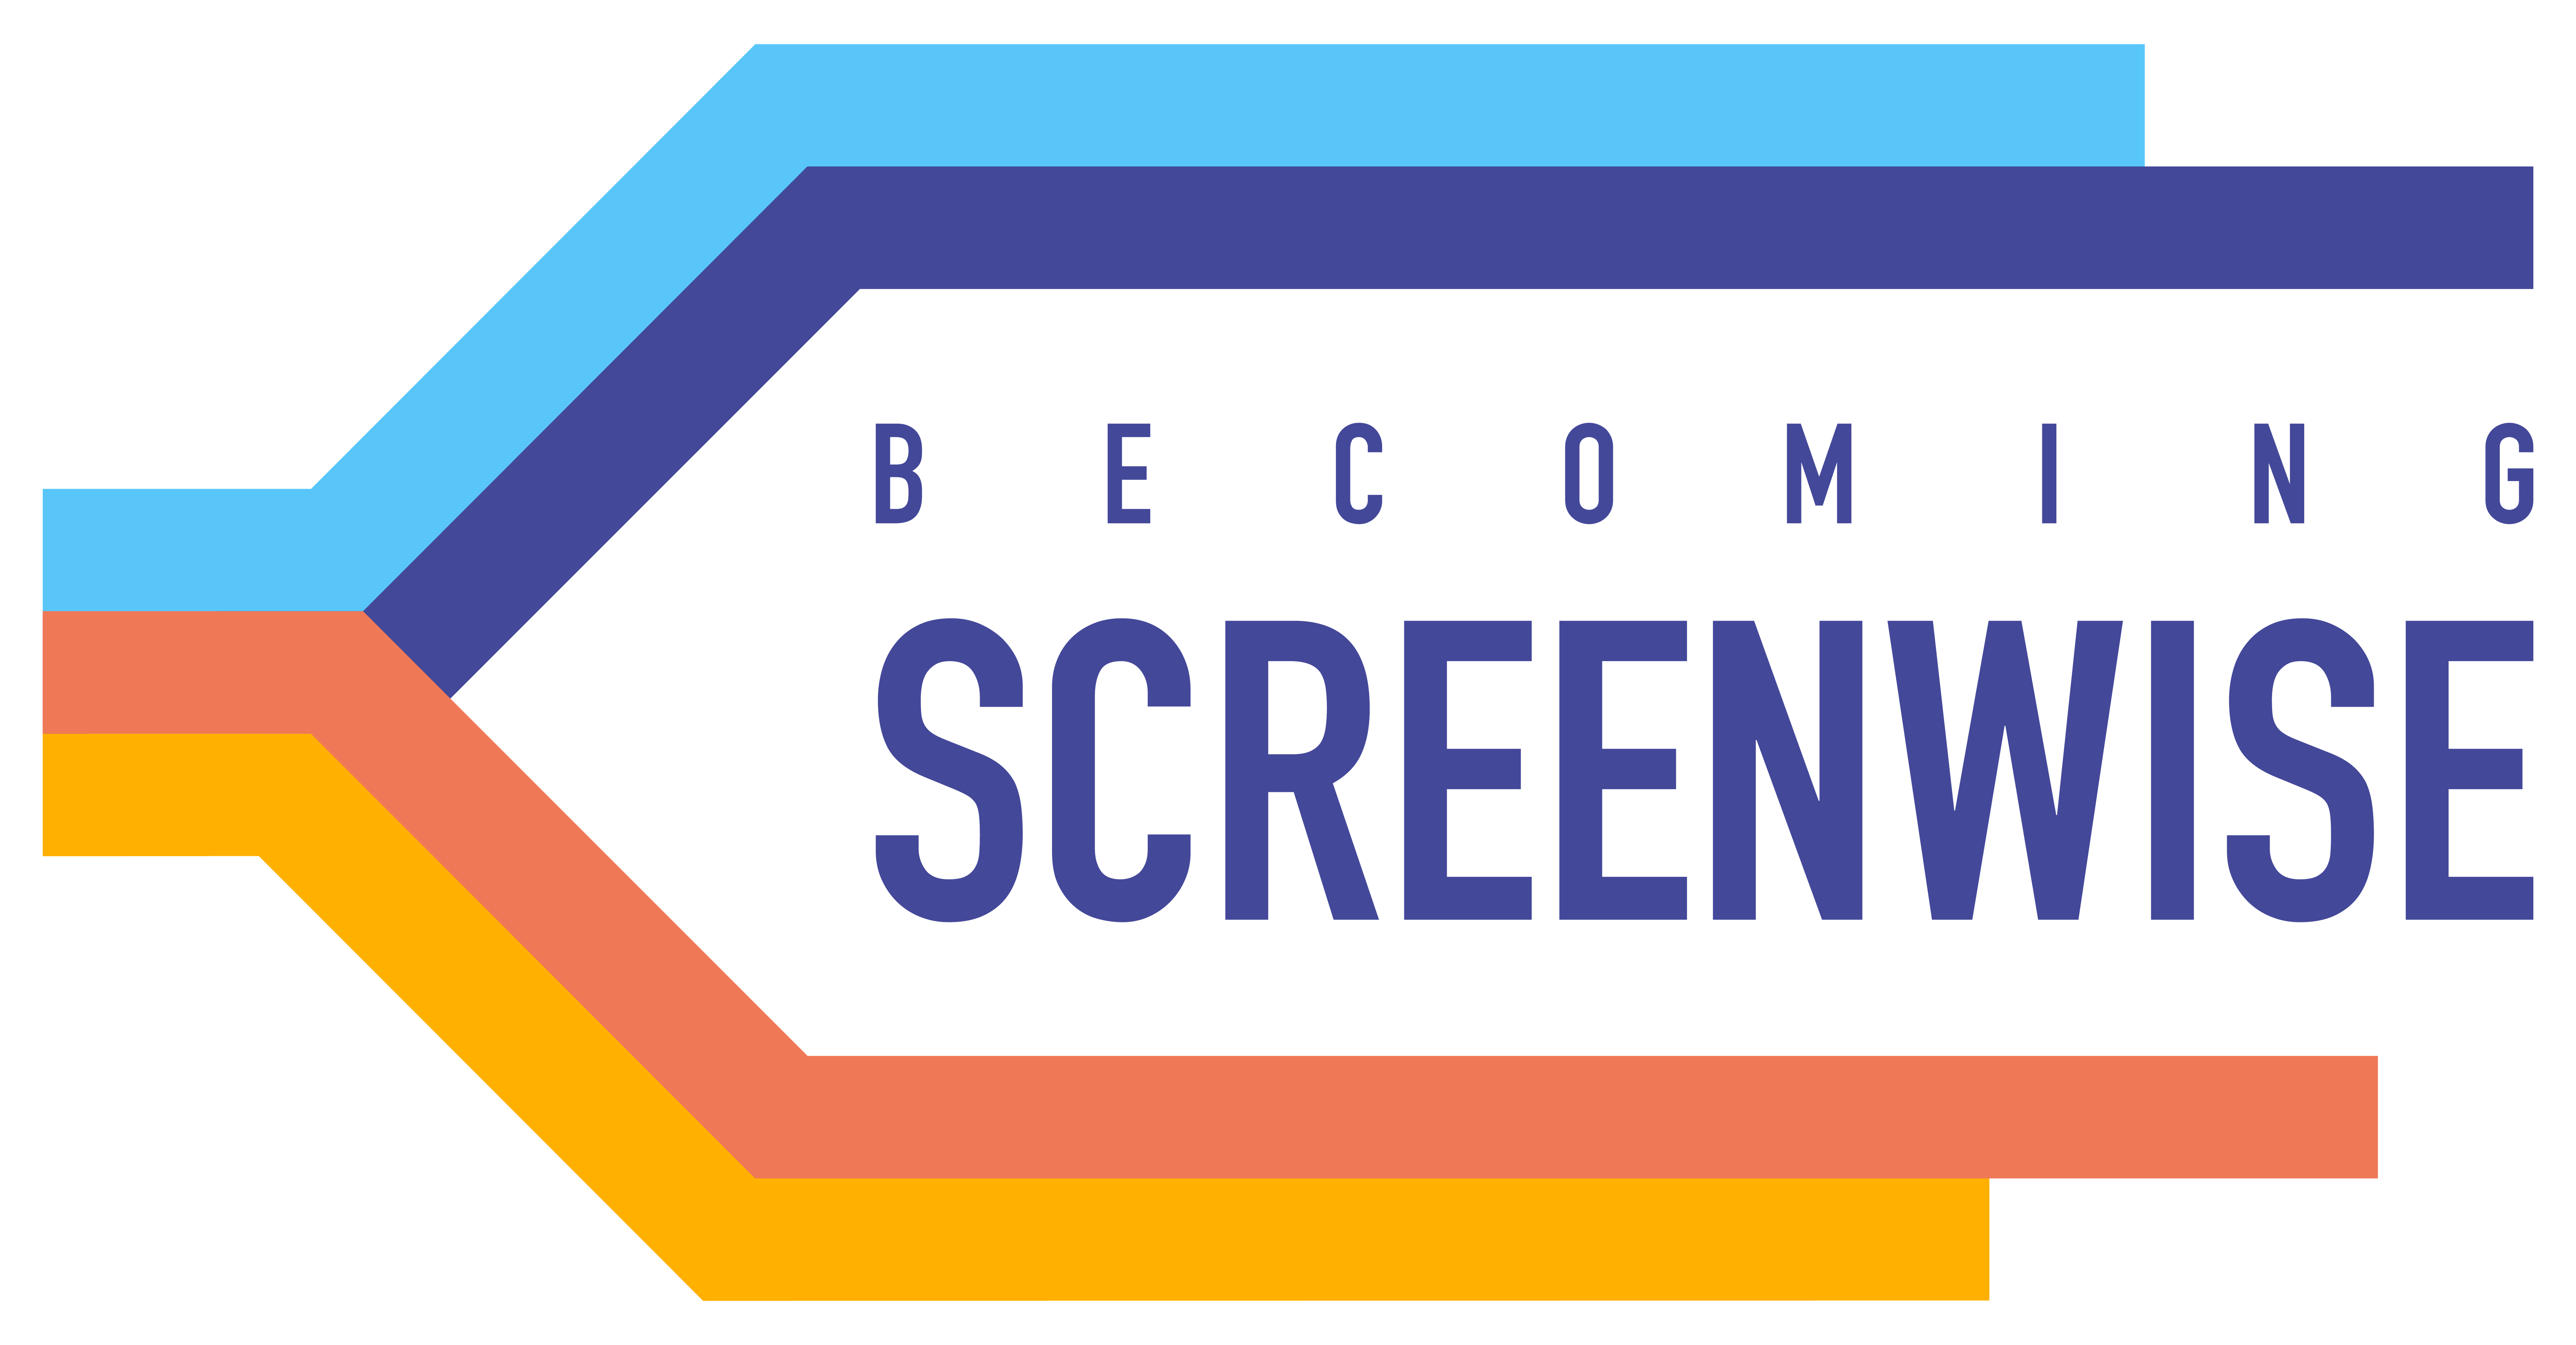 Becoming Screenwise